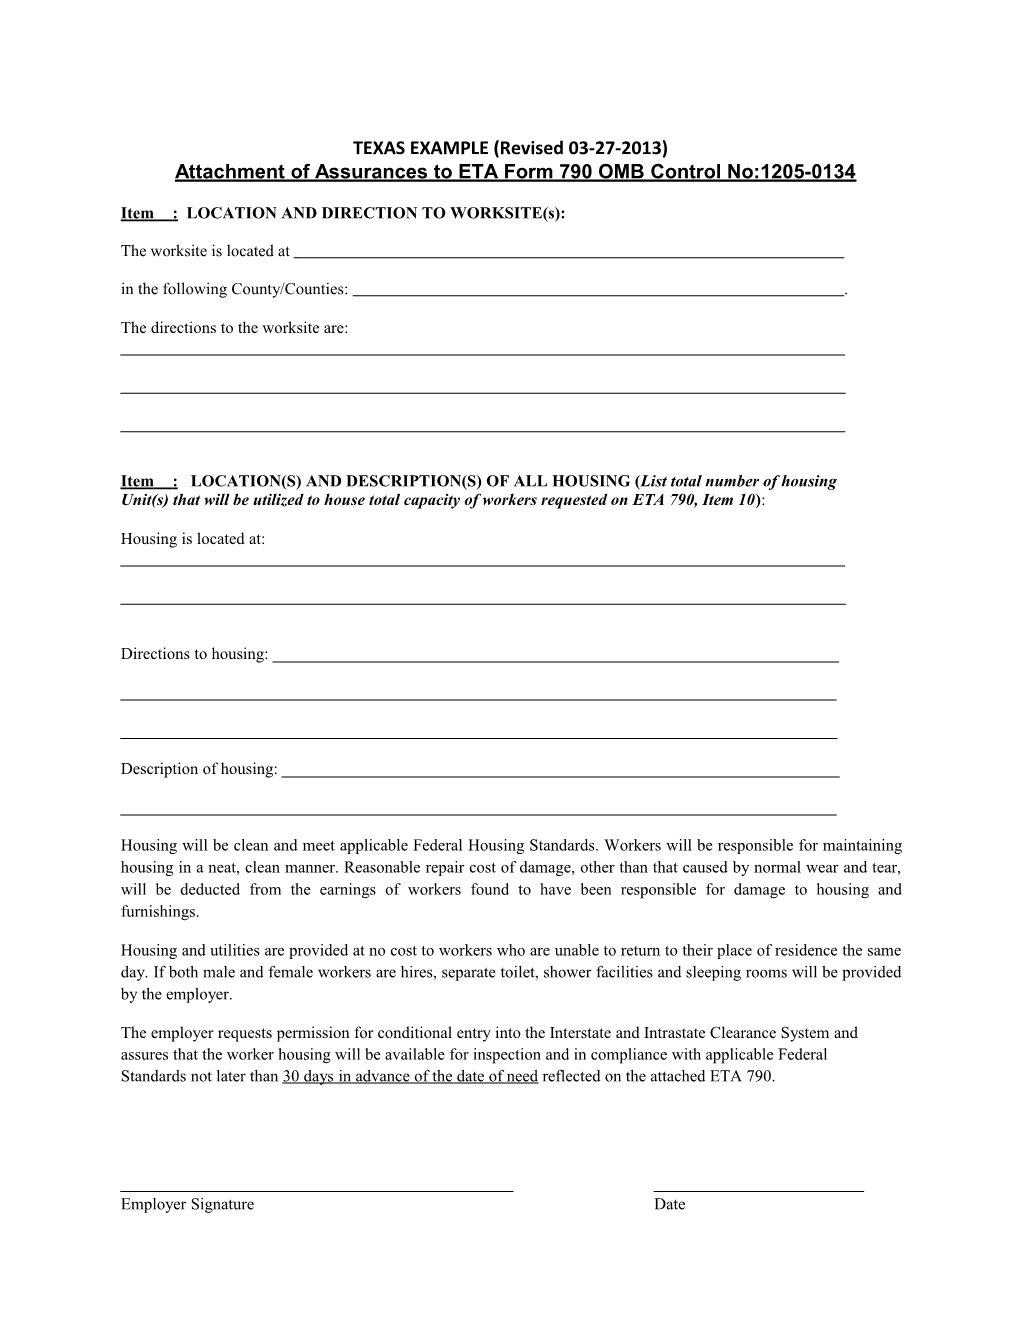 Attachment of Assurances to ETA Form 790 OMB Control No:1205-0134